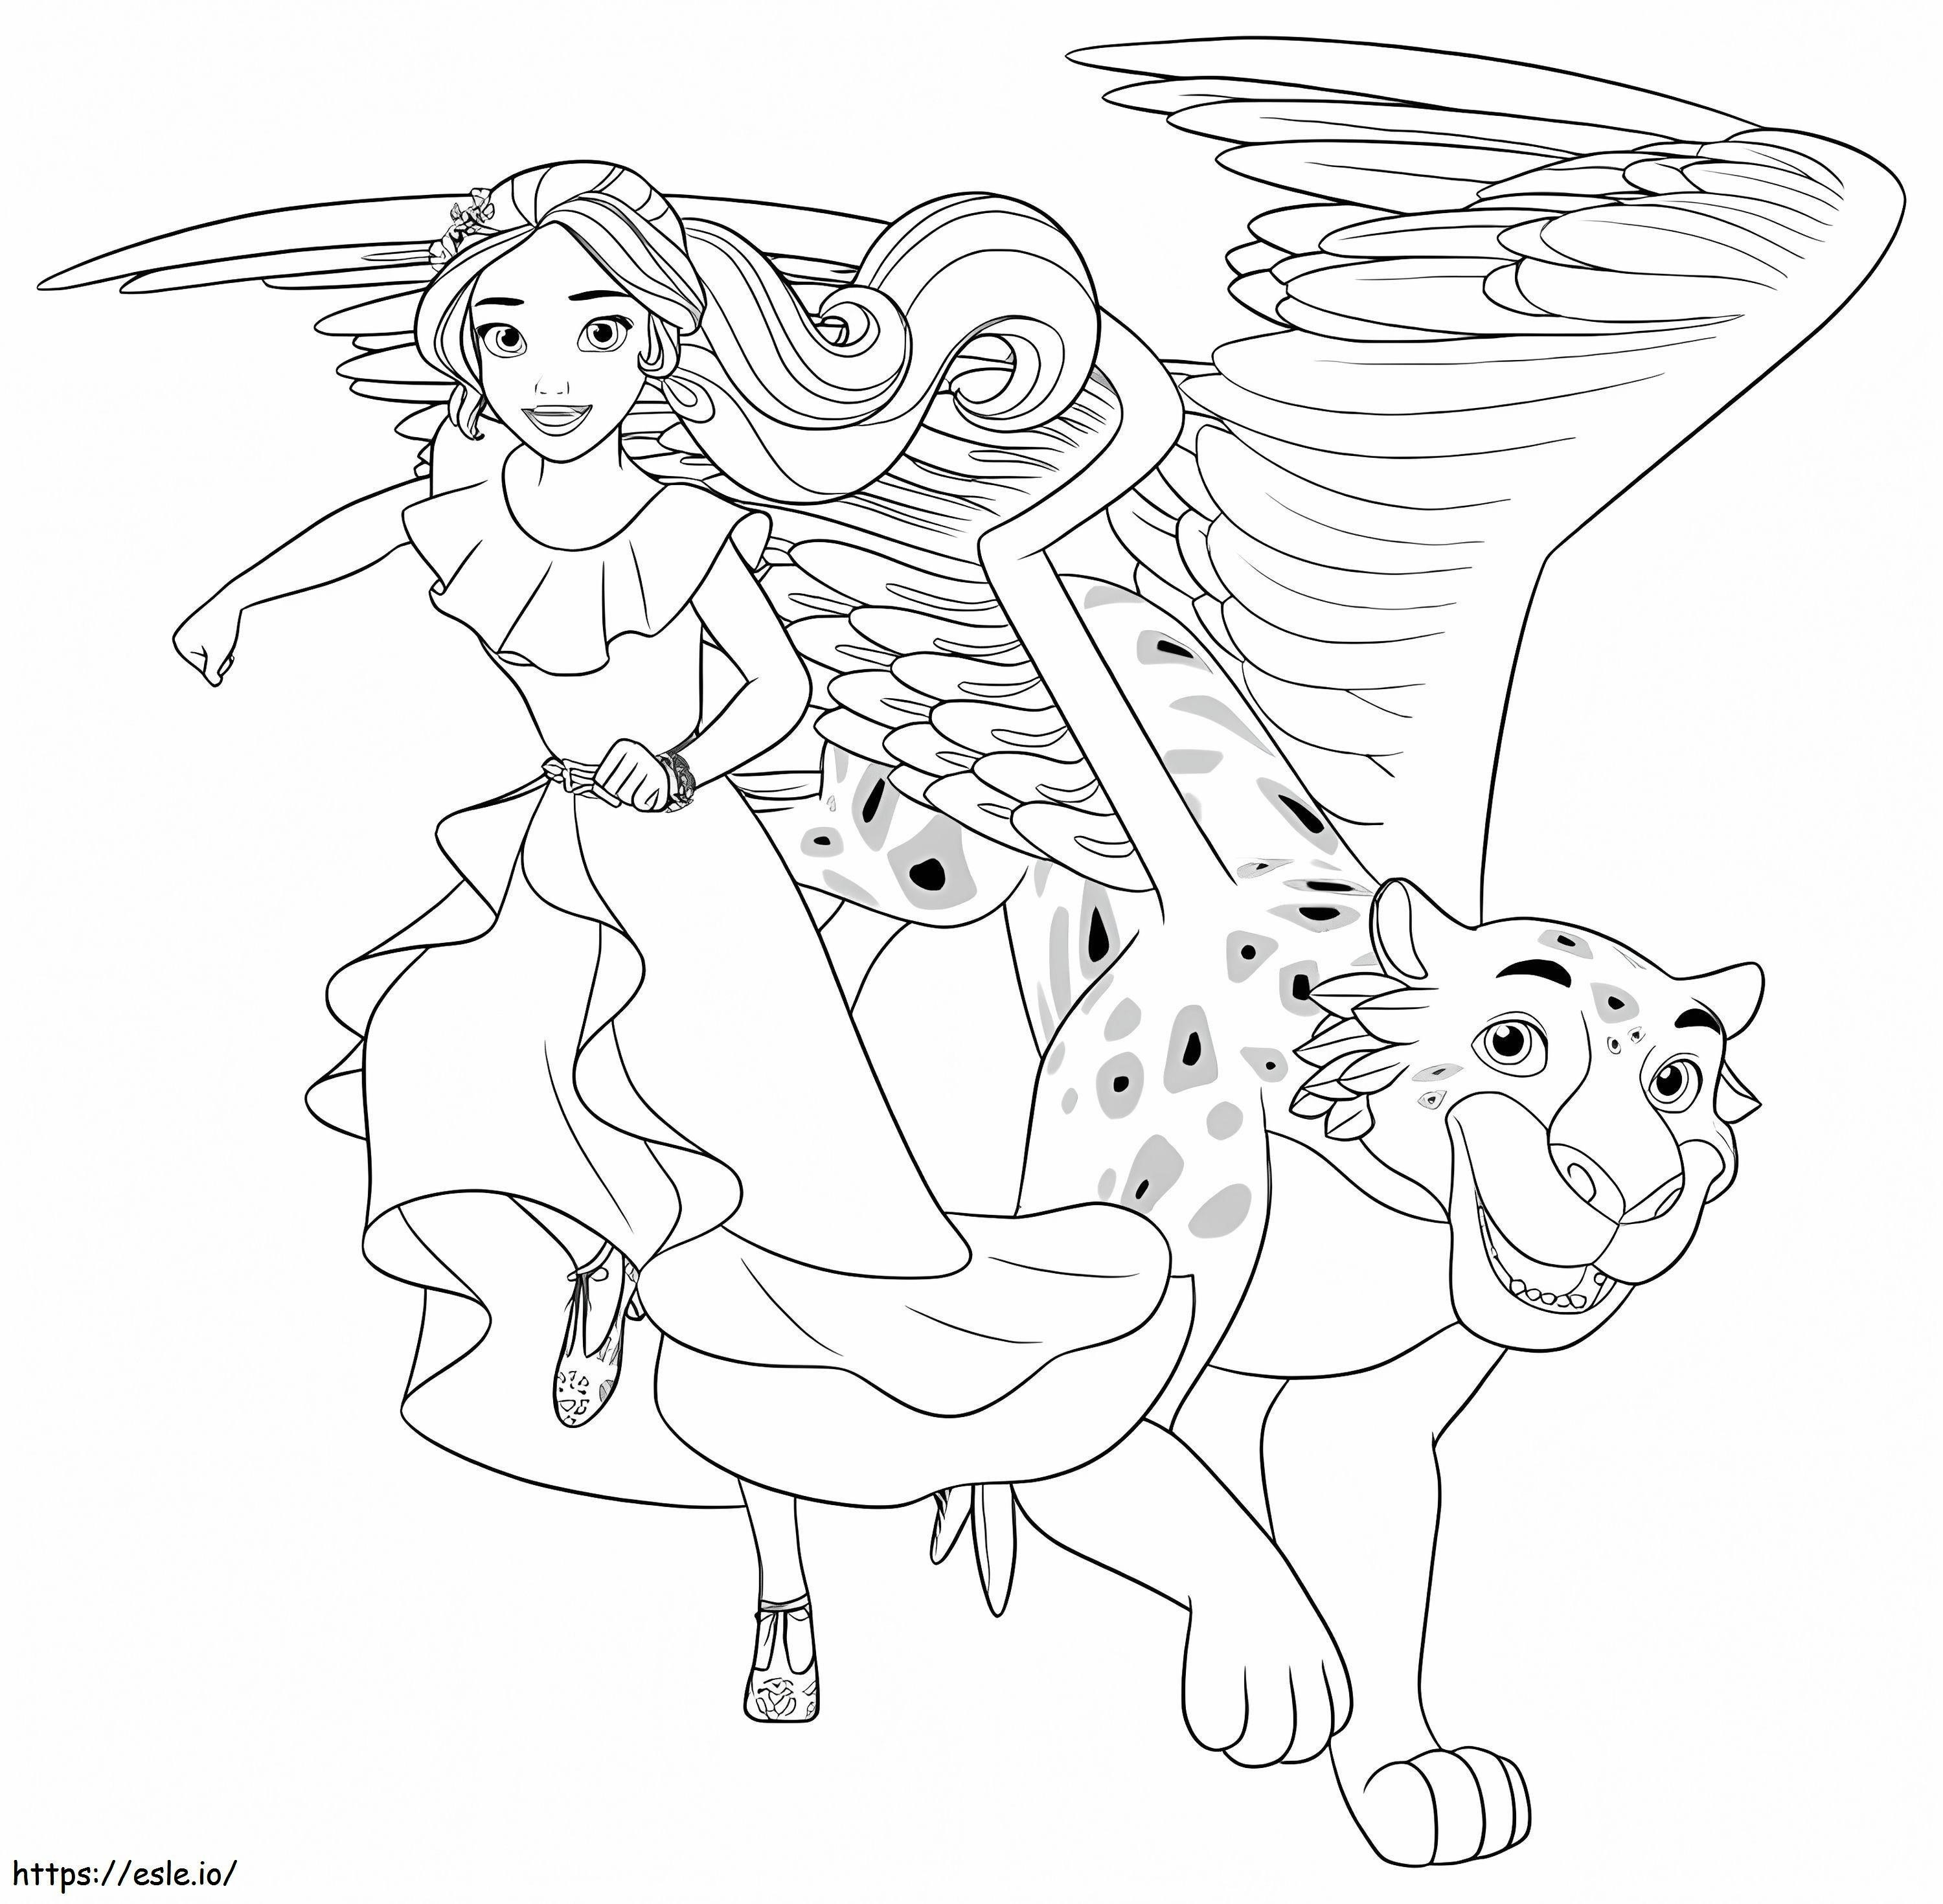 Princess Elena And Migs coloring page